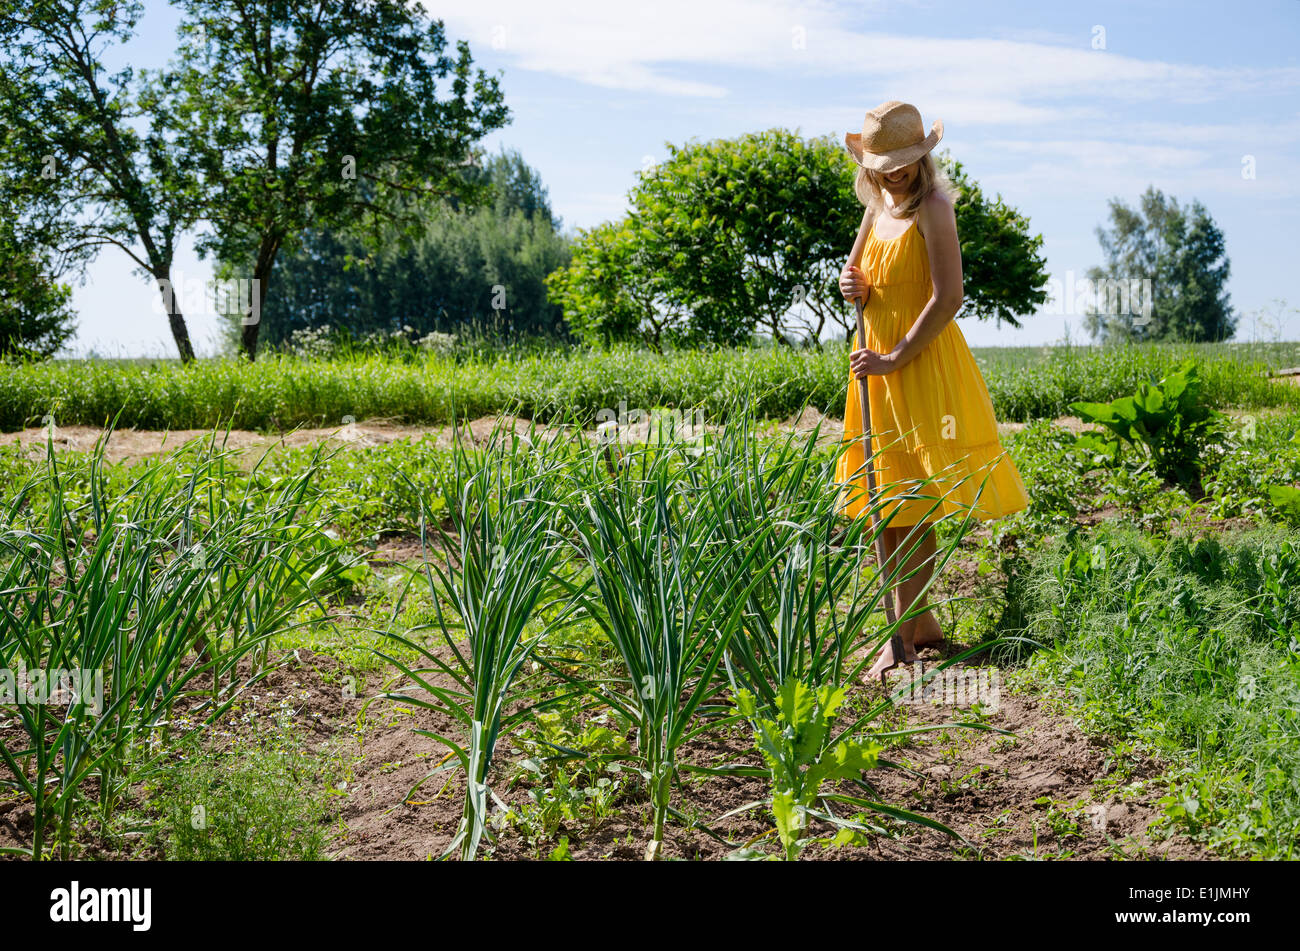 Barefoot gardener woman girl in dress and hat work in garden with hoe between garlic and pea plants. Stock Photo